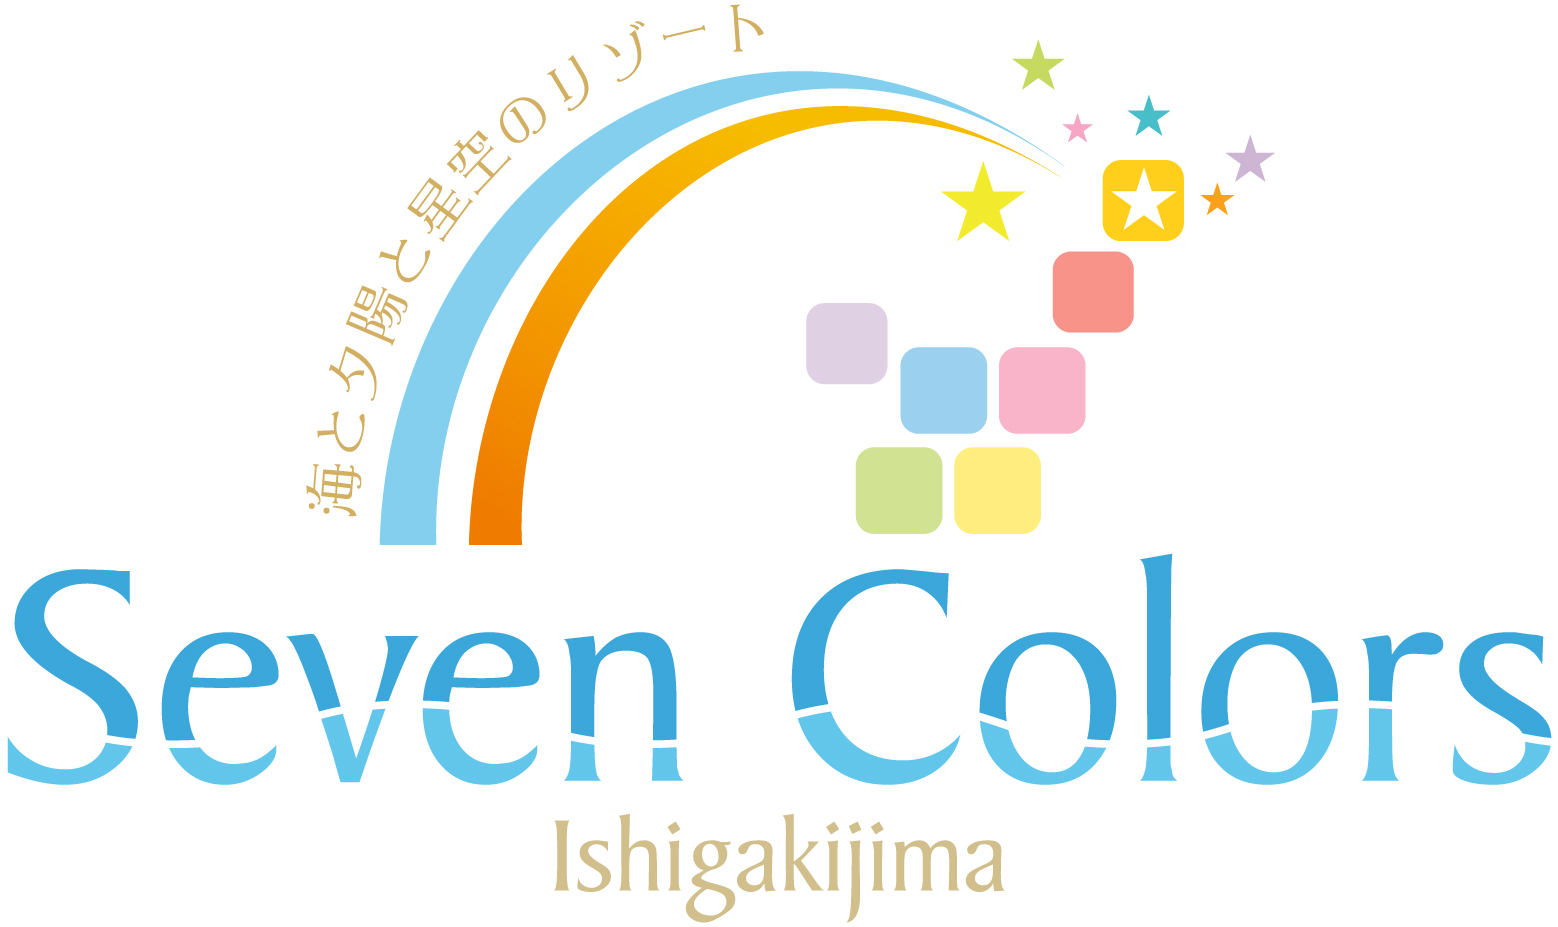 Seven Colors 石垣島